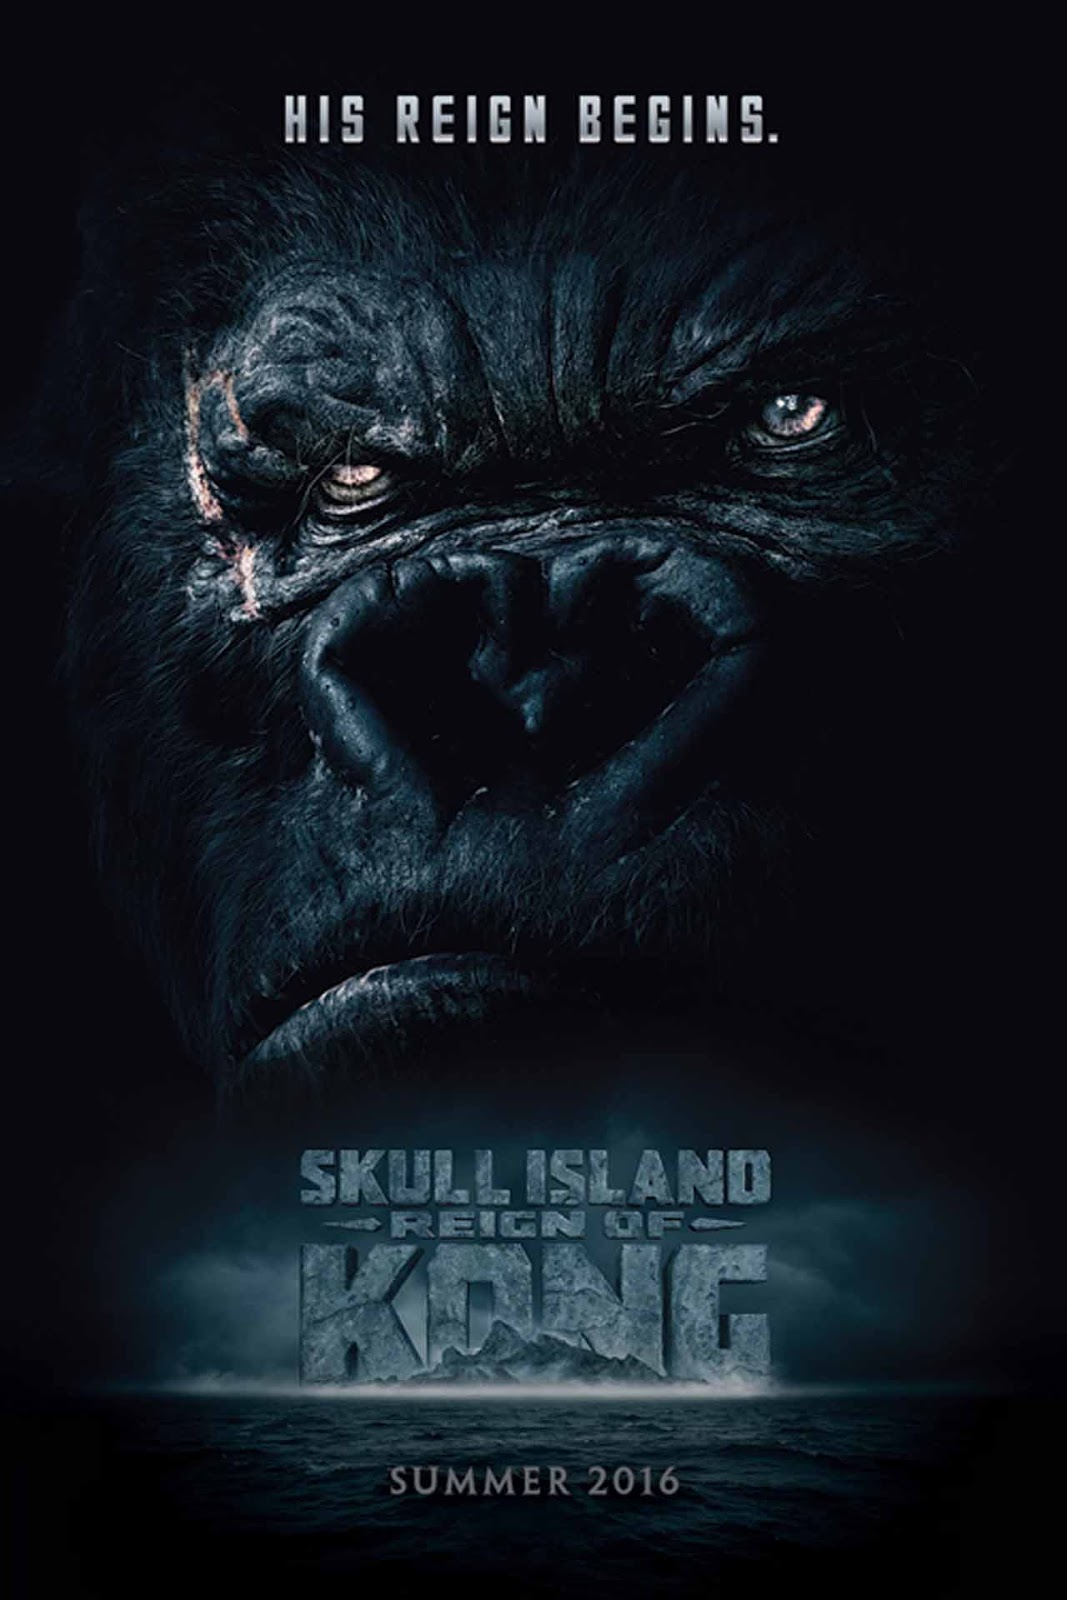 Watch kong skull island free online in english